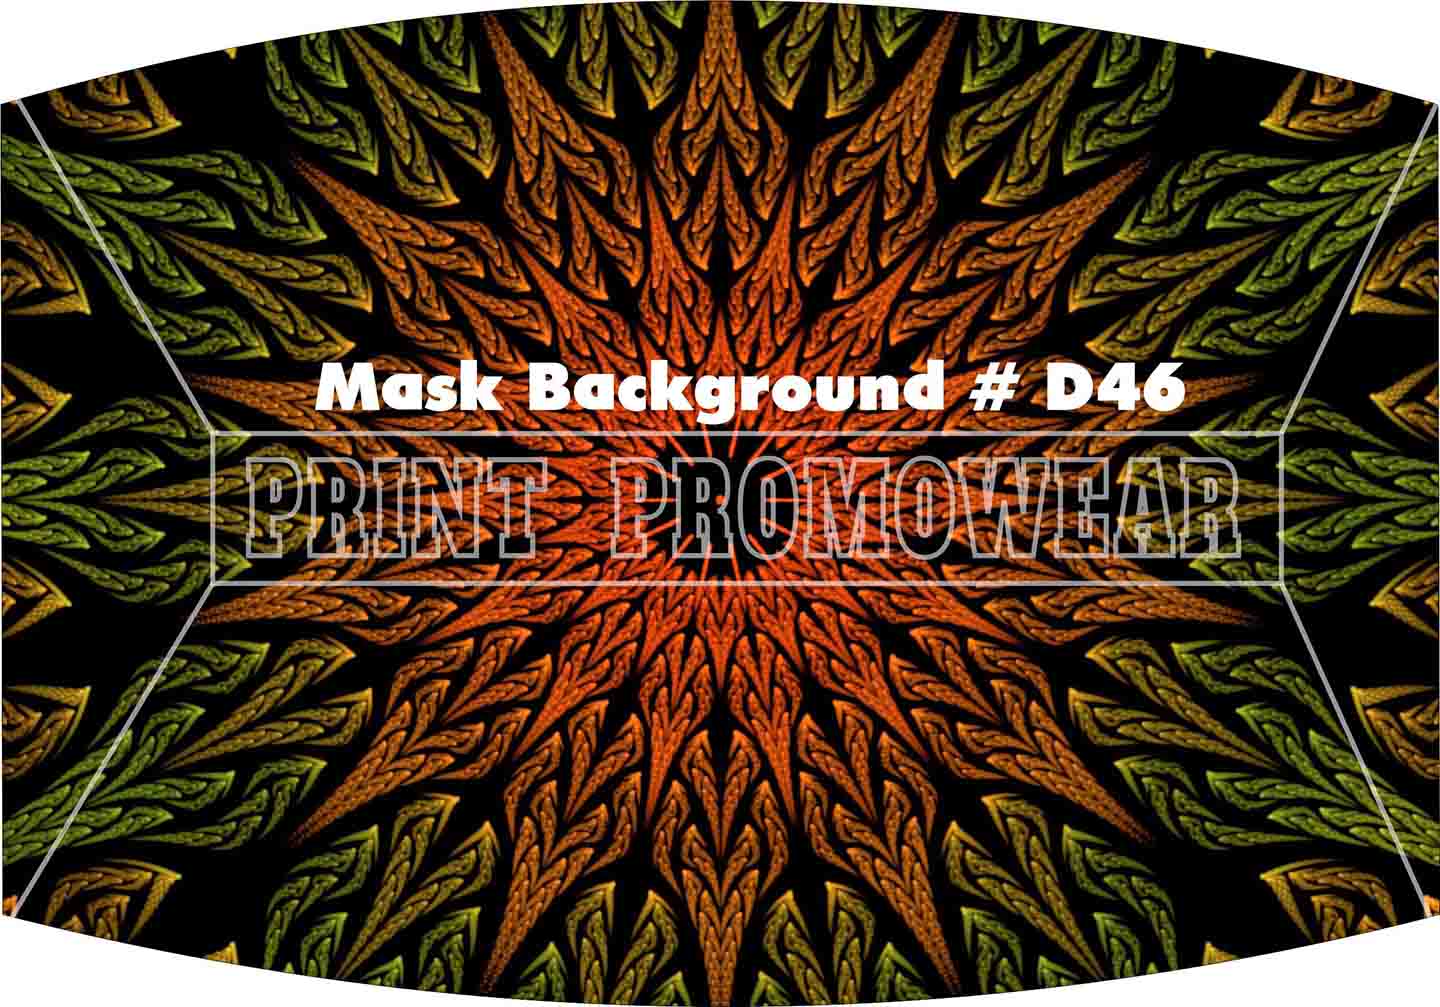 Image/MaskBackground/d46.jpg